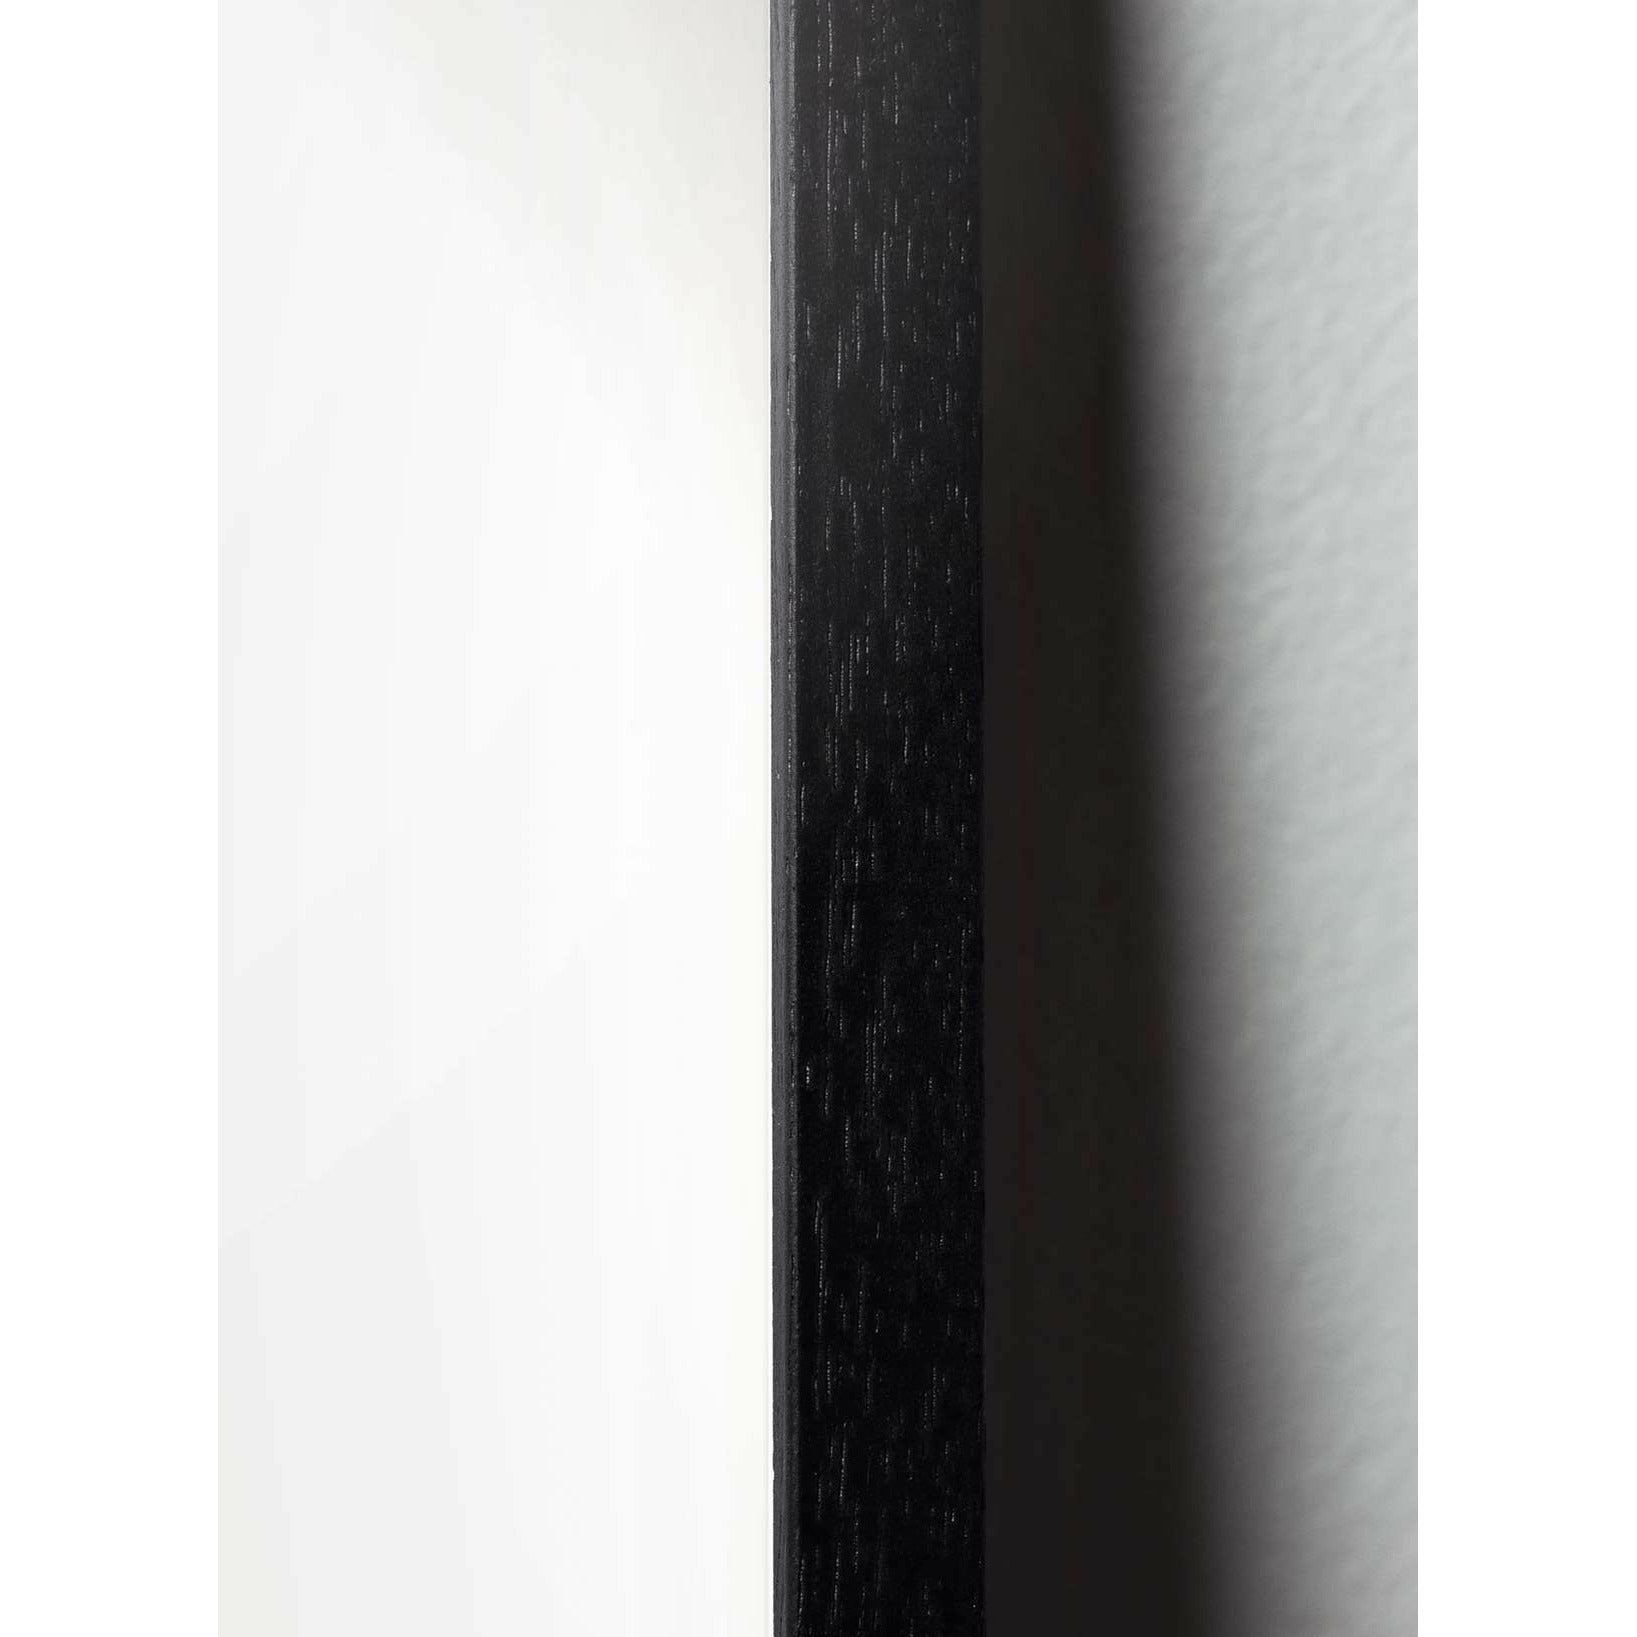 Brainchild Pelican Classic -affisch, ram i svart målat trä 30x40 cm, svart bakgrund